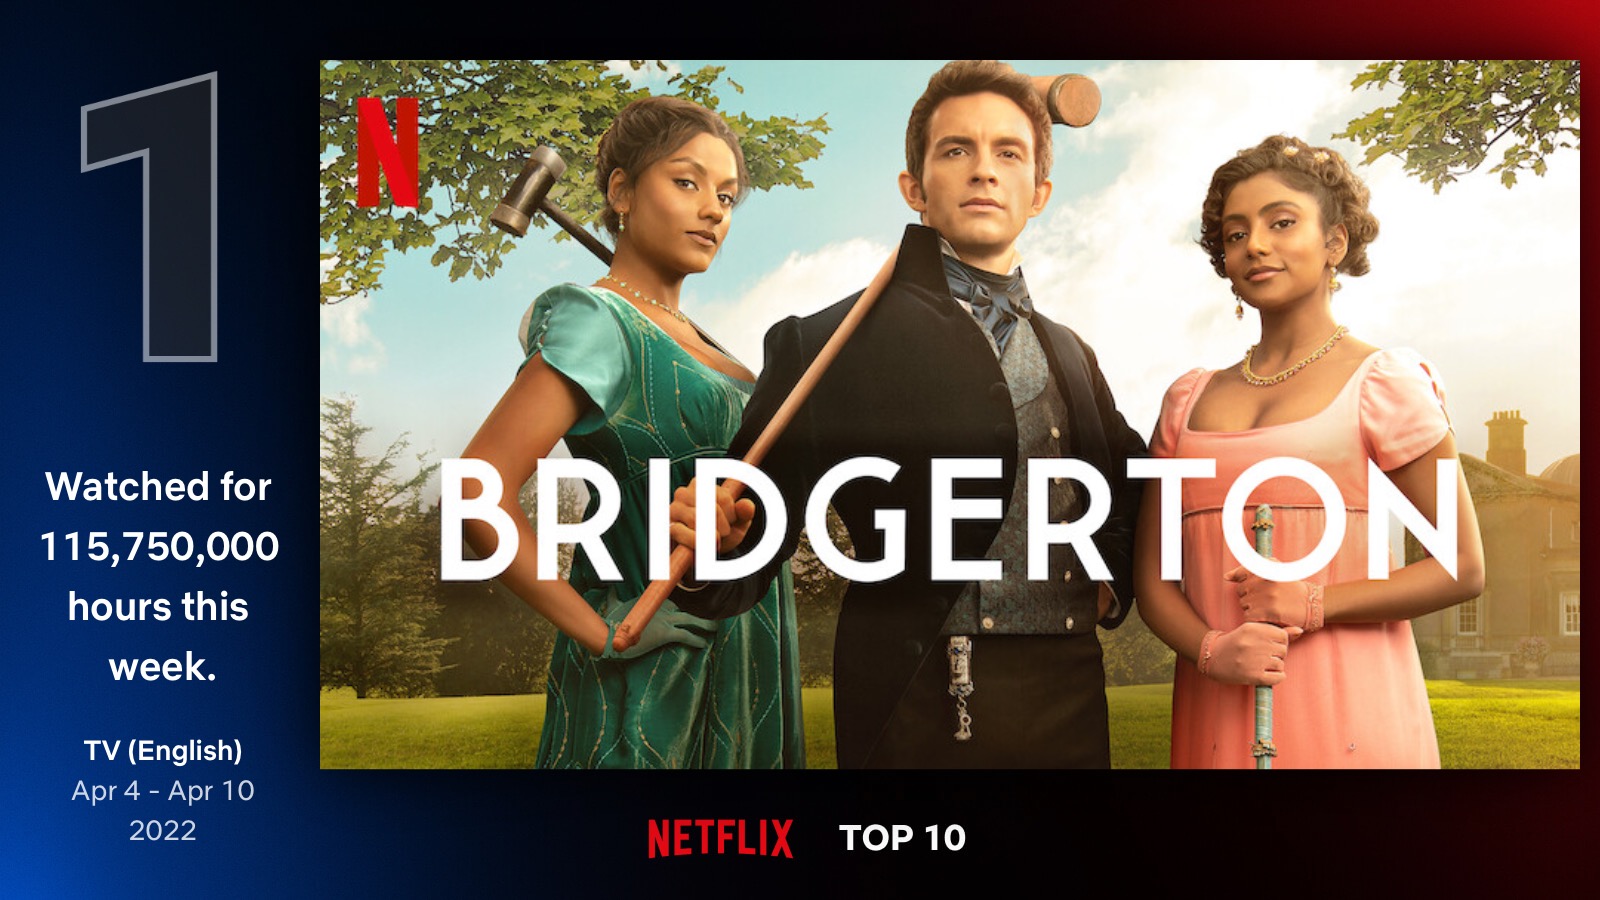 Netflix Top 10: 'Bridgerton' Season 2 Breaks Single-Week Record